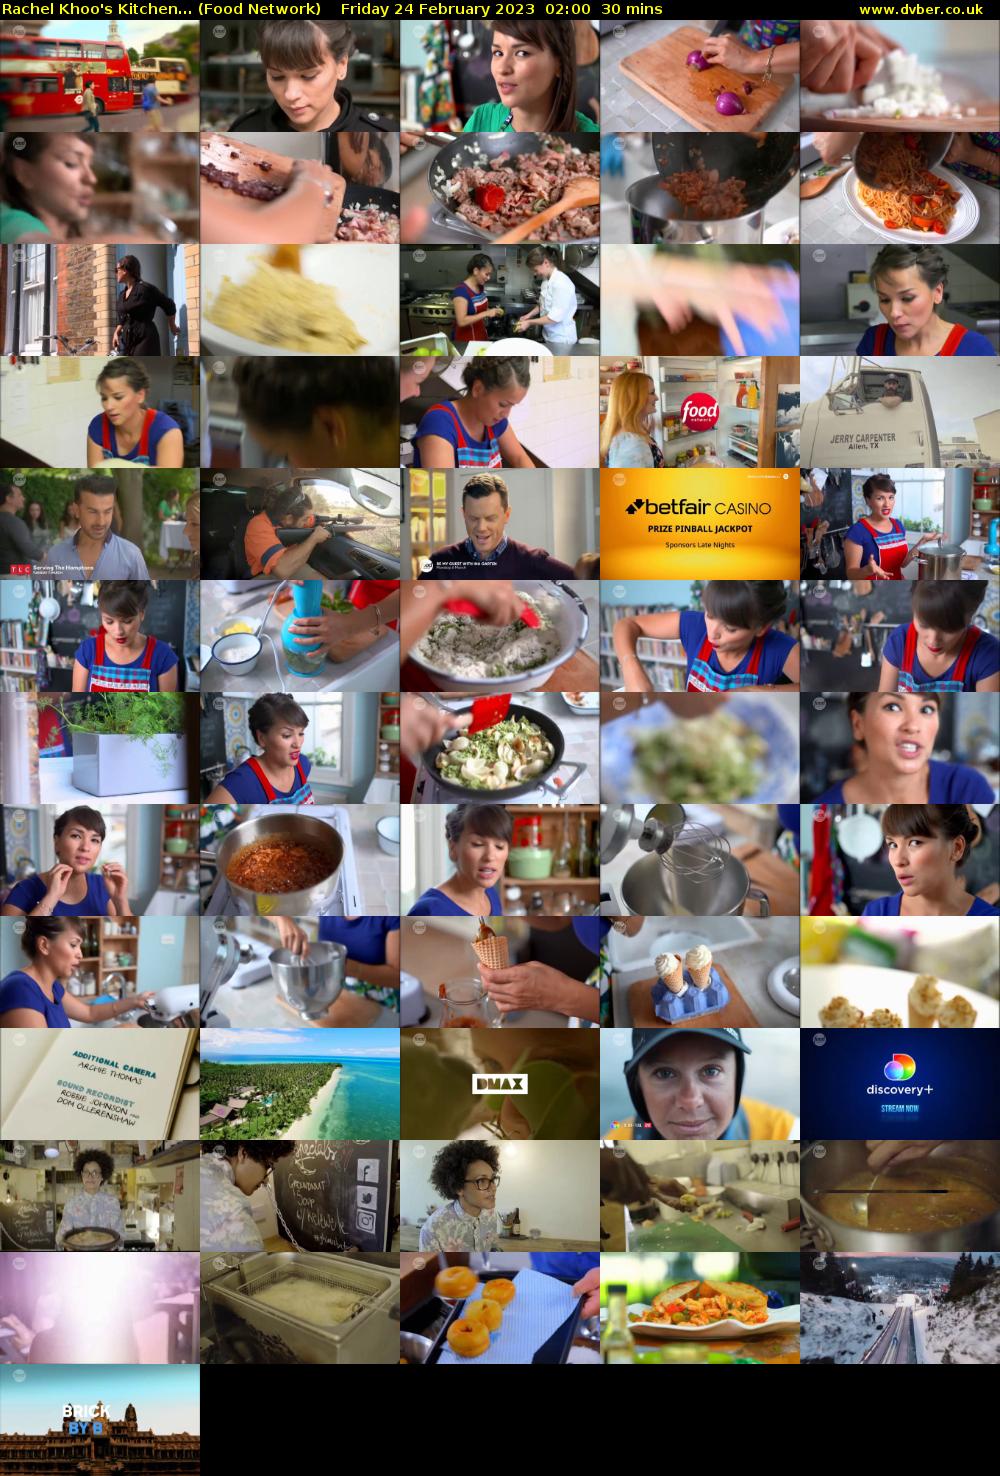 Rachel Khoo's Kitchen... (Food Network) Friday 24 February 2023 02:00 - 02:30